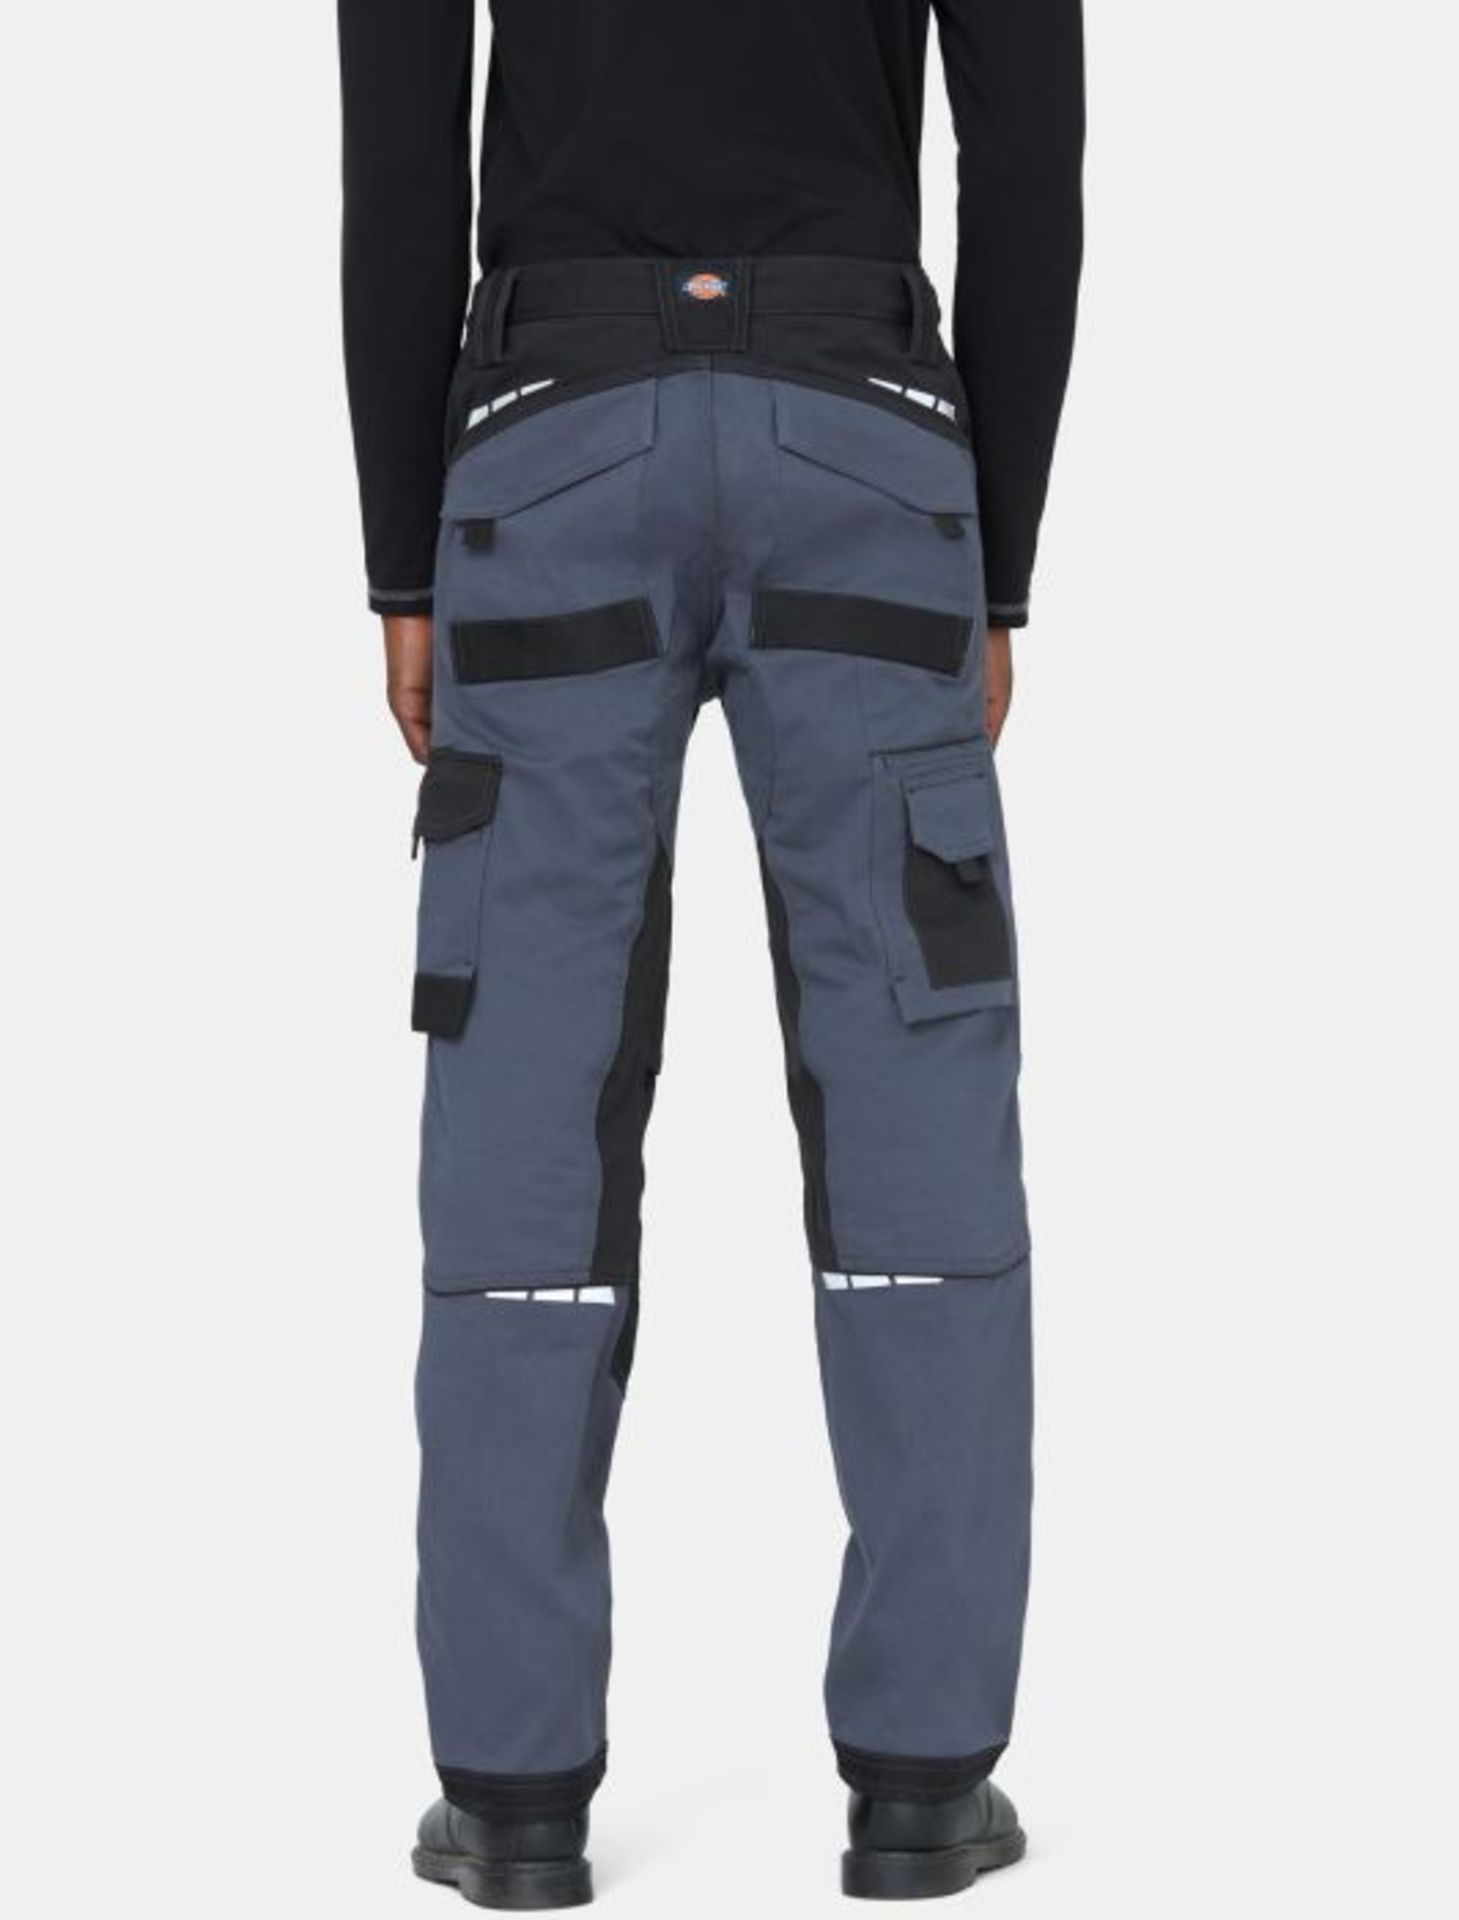 Brand New Dickies GDT Premium Workwear Trousers - Grey/Black (WD4901) 28R - Image 2 of 3